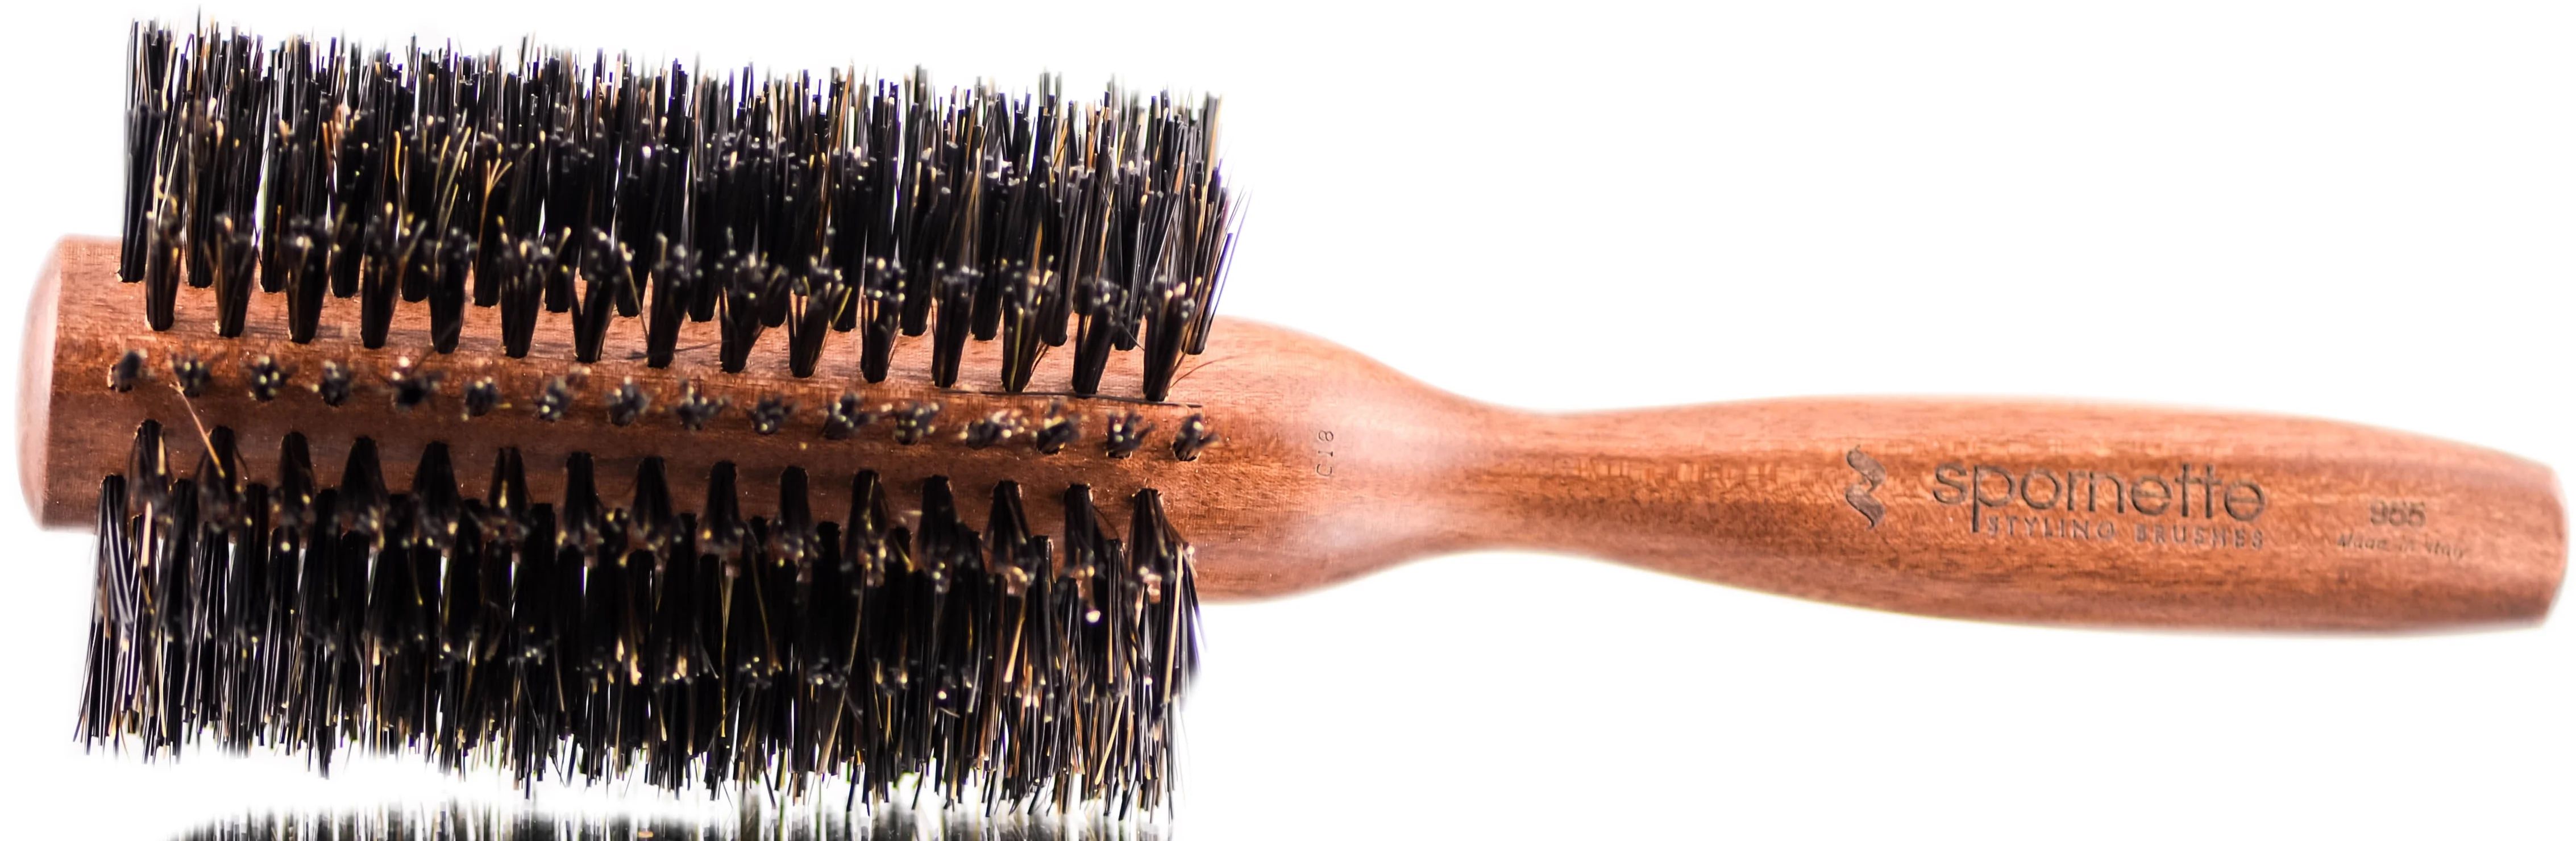 Spornette Styling Brush - Option: Italian Bristle Boar Brush #955 | Walmart (US)